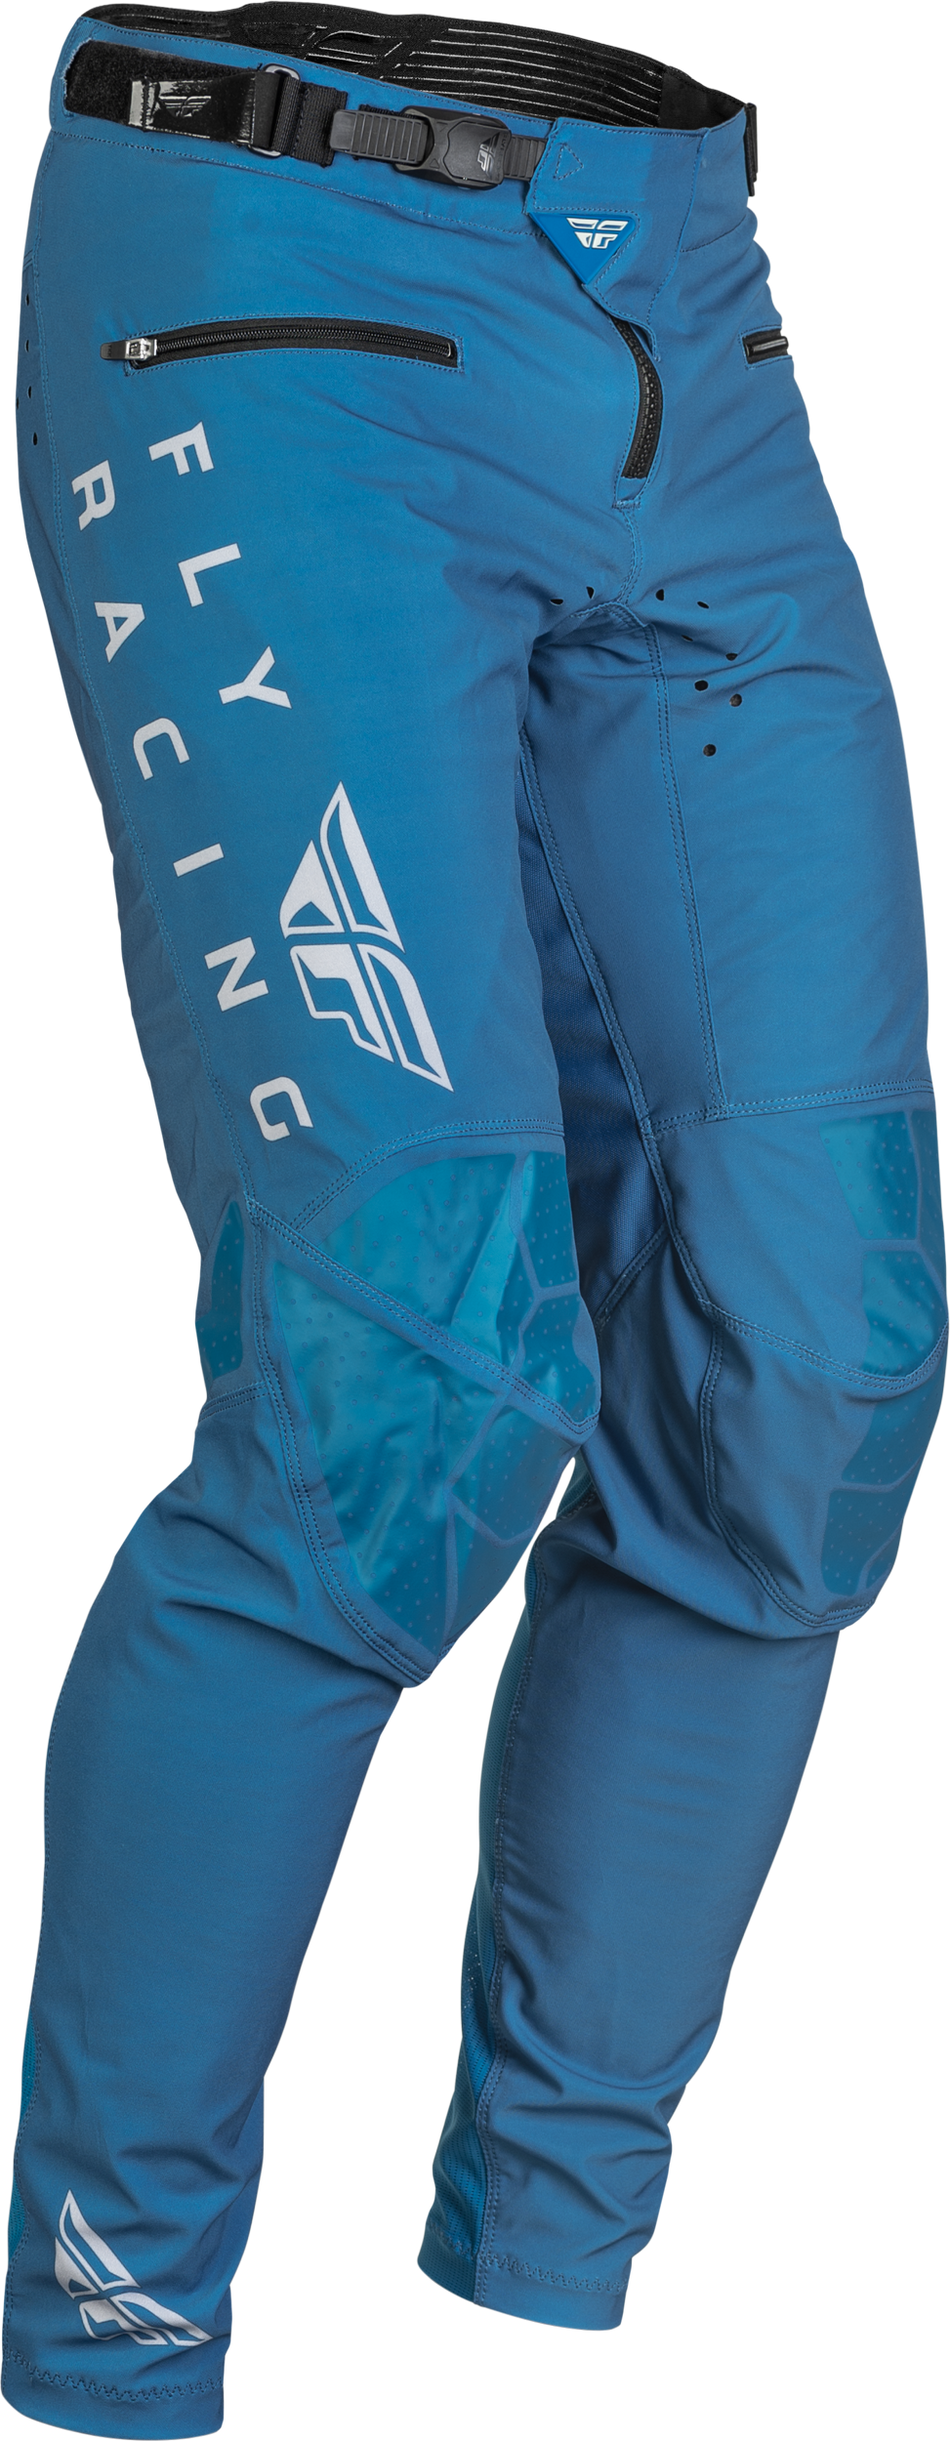 FLY RACING Youth Radium Bicycle Pants Slate Blue/Grey Sz 22 376-04422